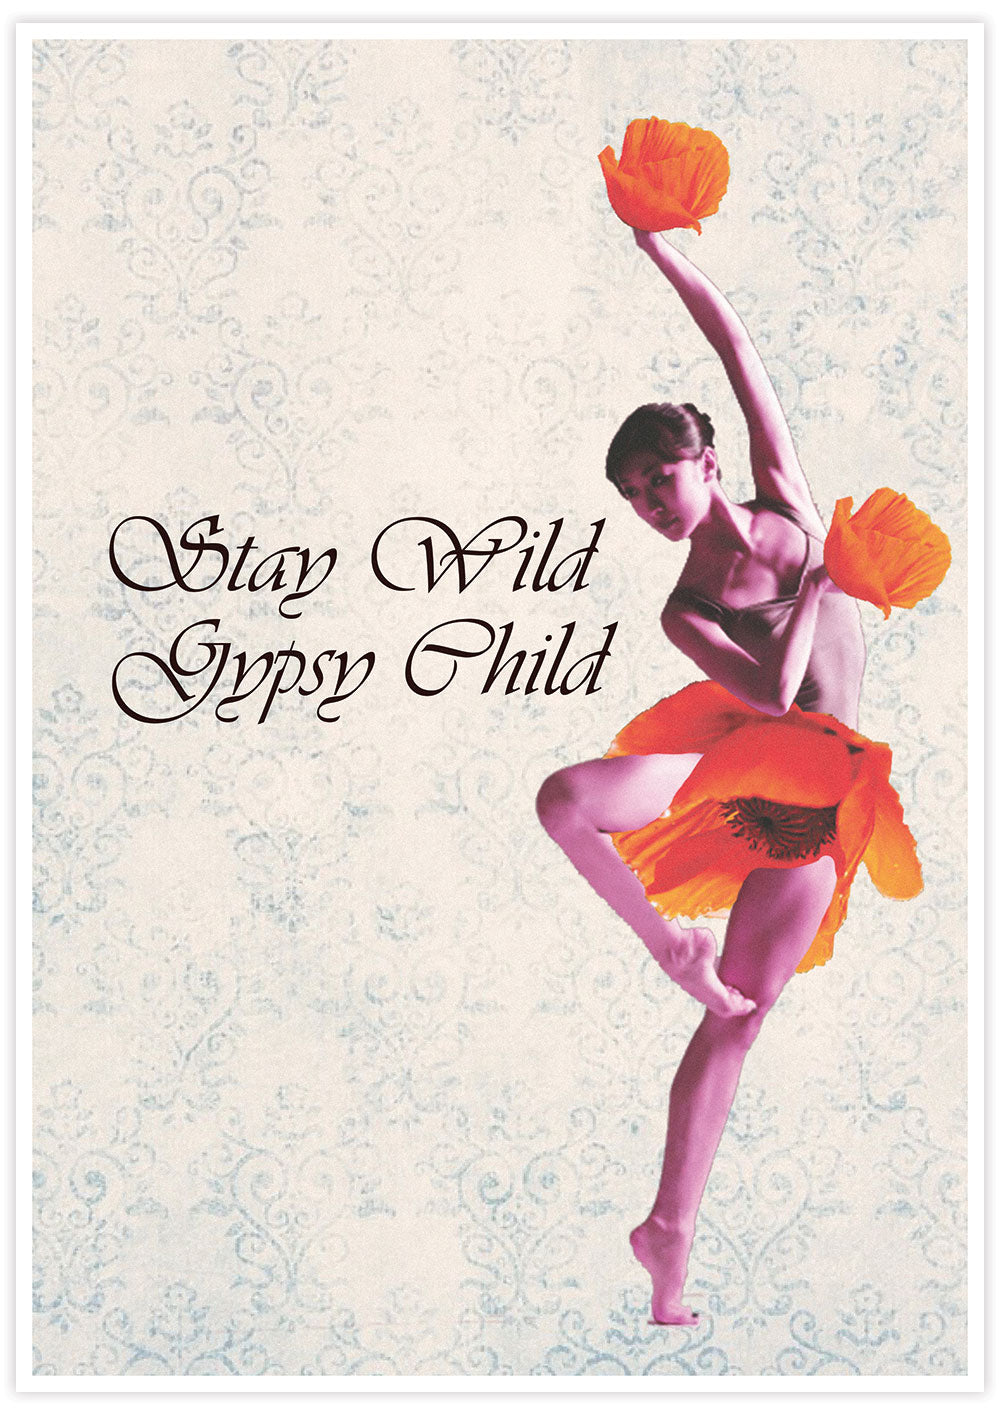 Stay Wild Gypsy Child Child Dancer Art Print not in a frame